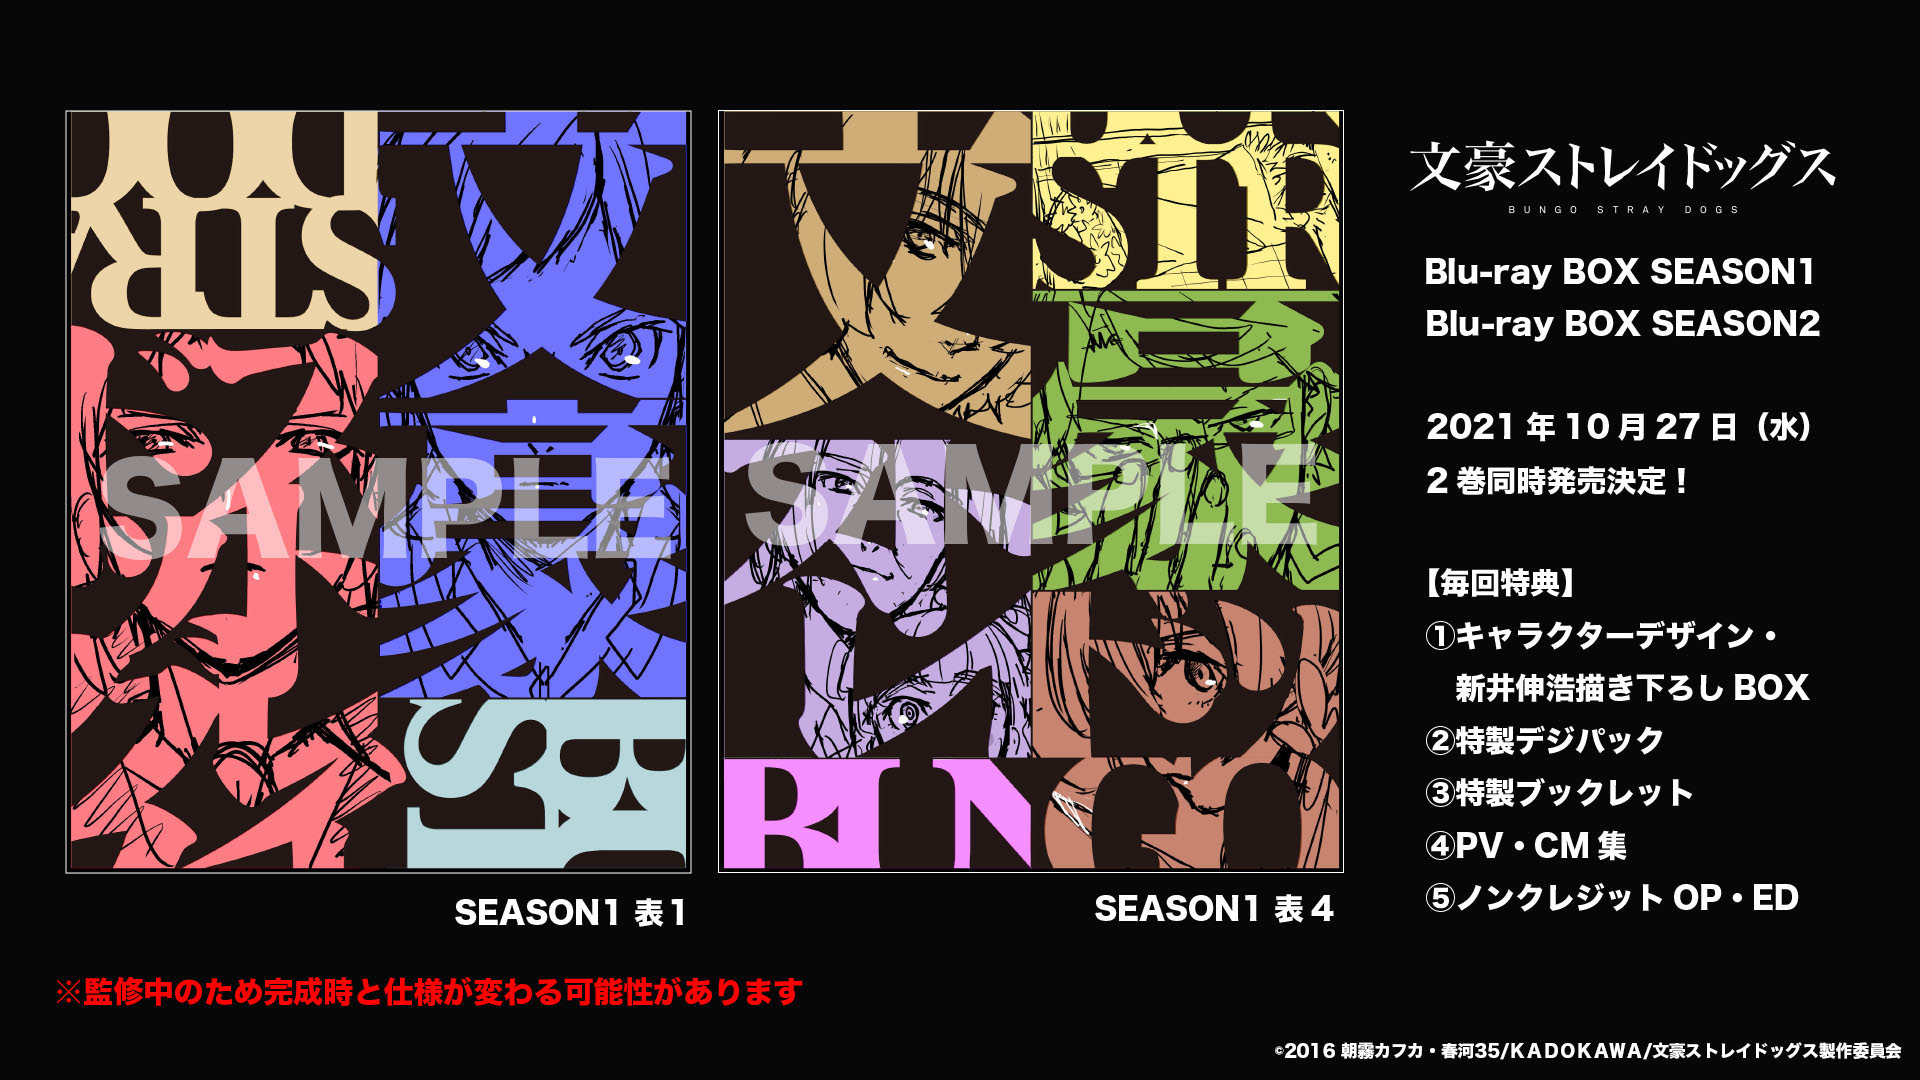 TVアニメ「文豪ストレイドッグス」Blu-ray BOXが発売決定！朝霧カフカ先生、春河３５先生からコメントも到着